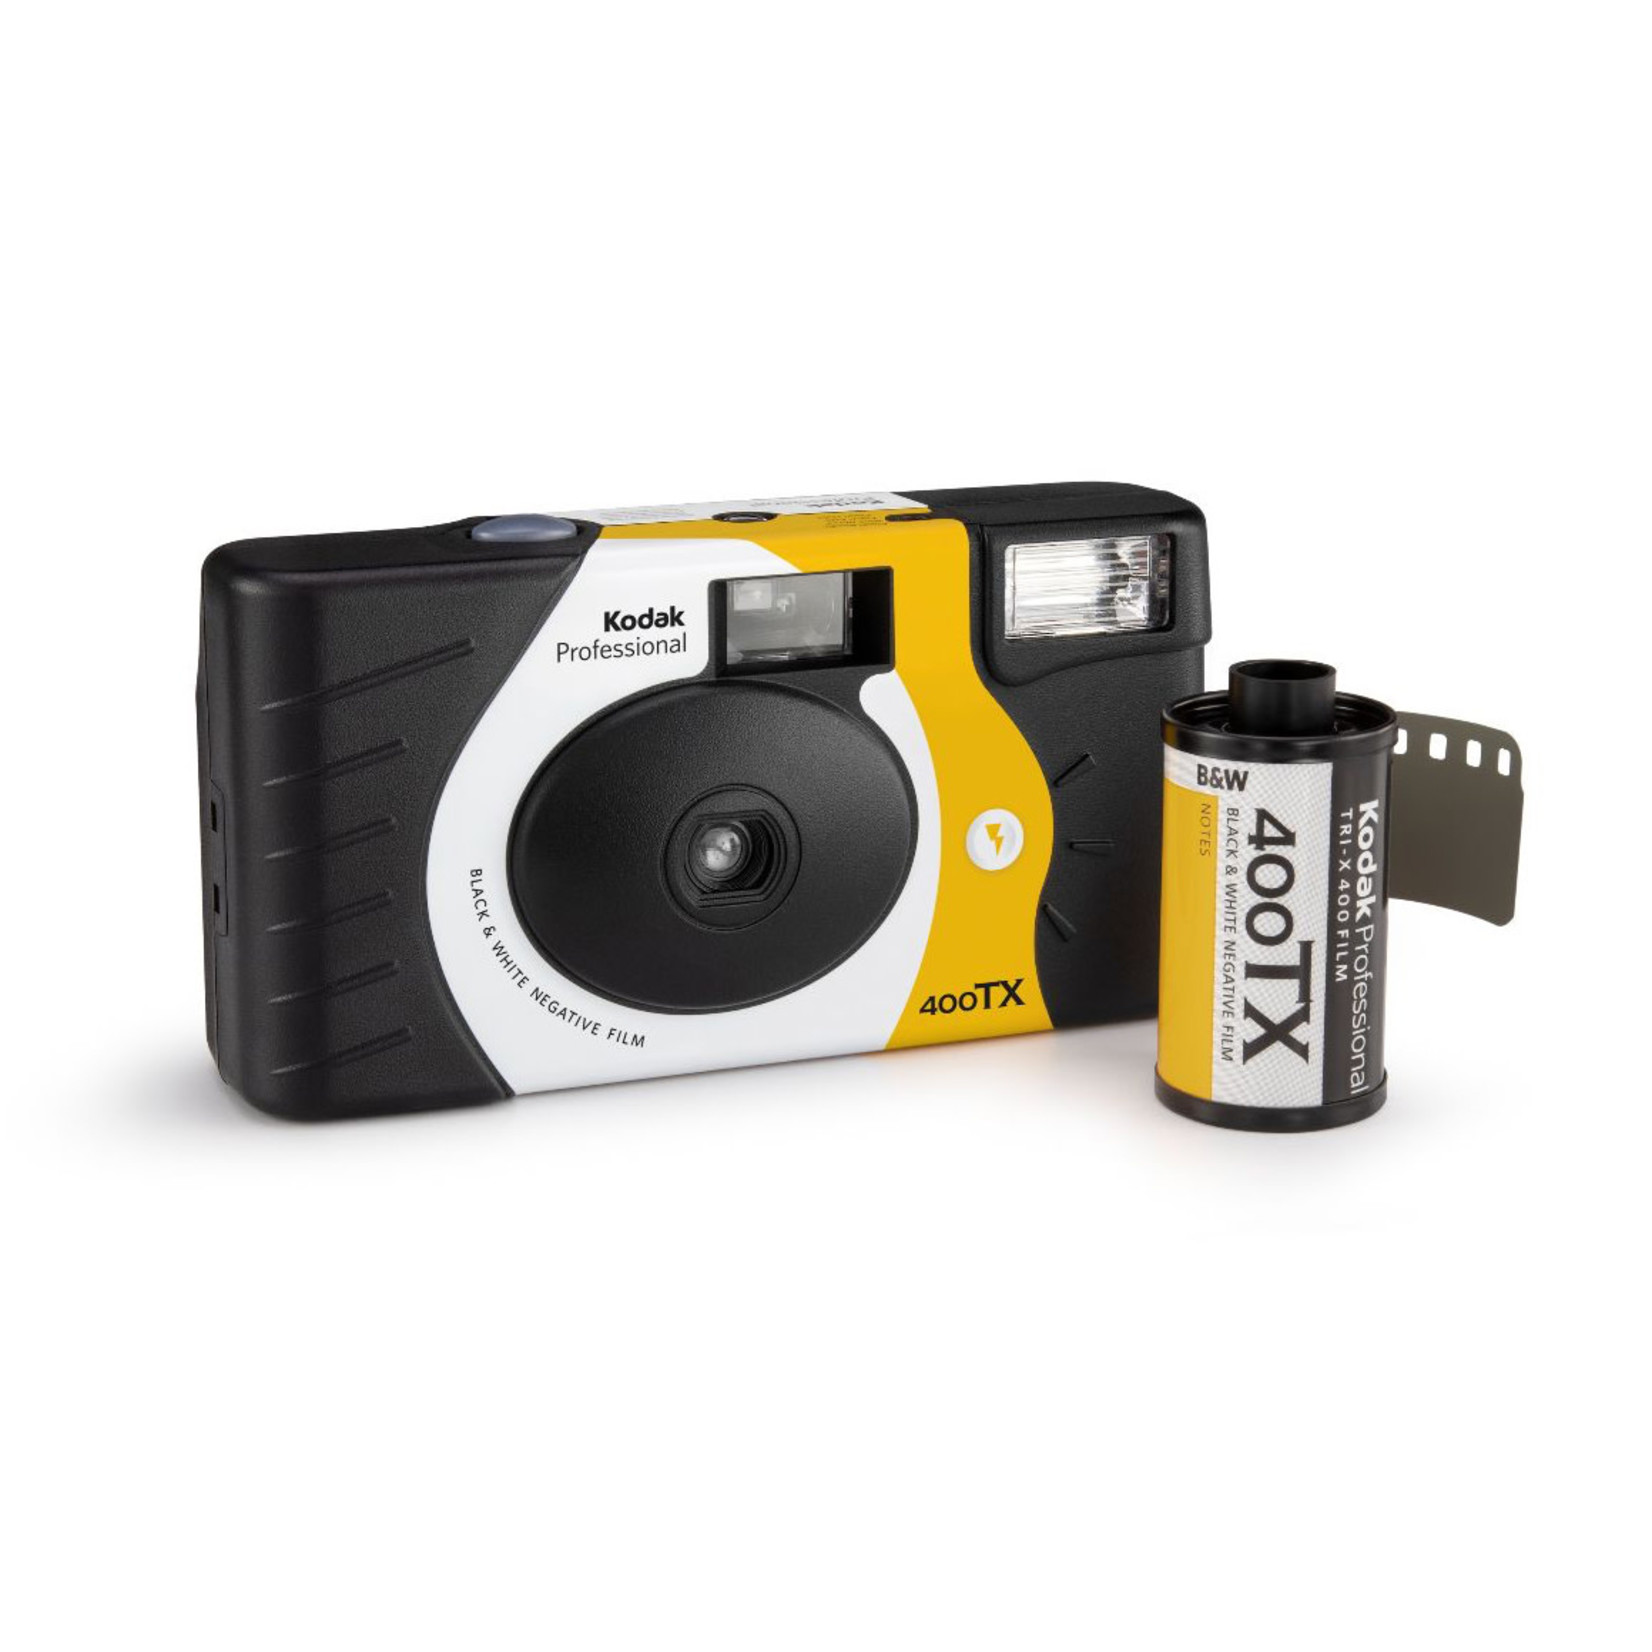 Kodak Kodak Professional Tri-X 400 Single Use Camera